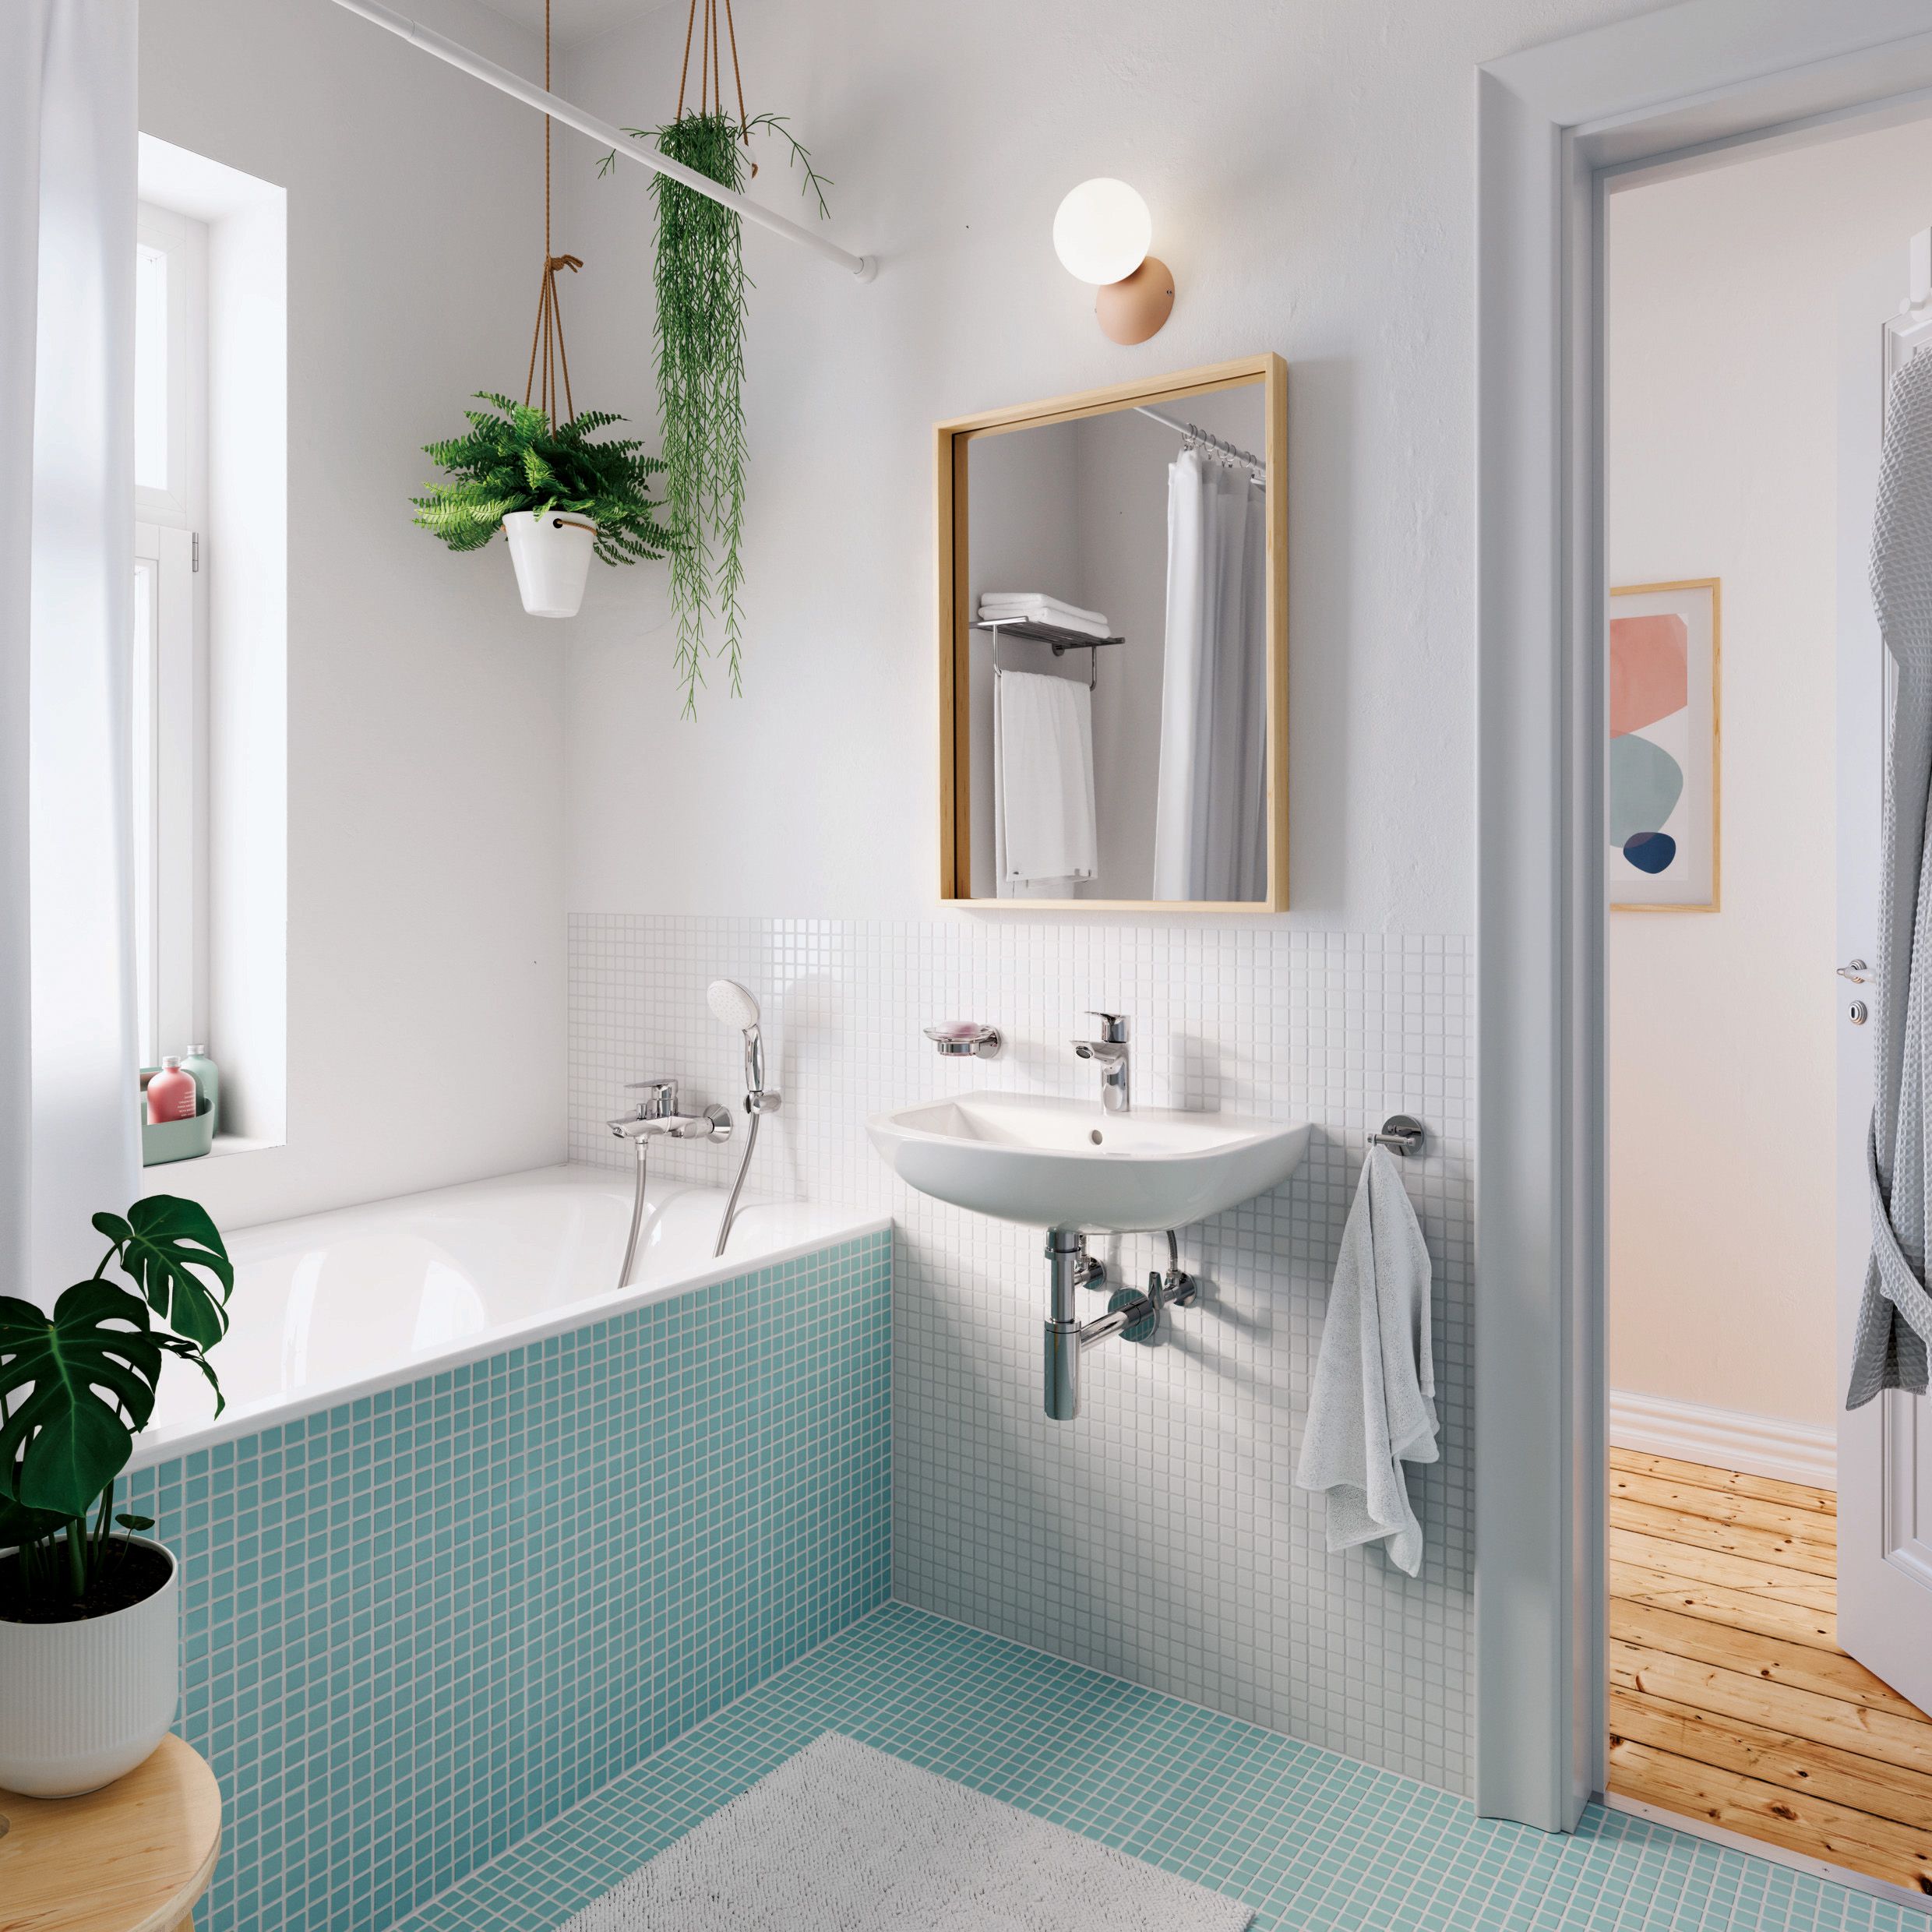 20 Small Bathroom Ideas on a Budget